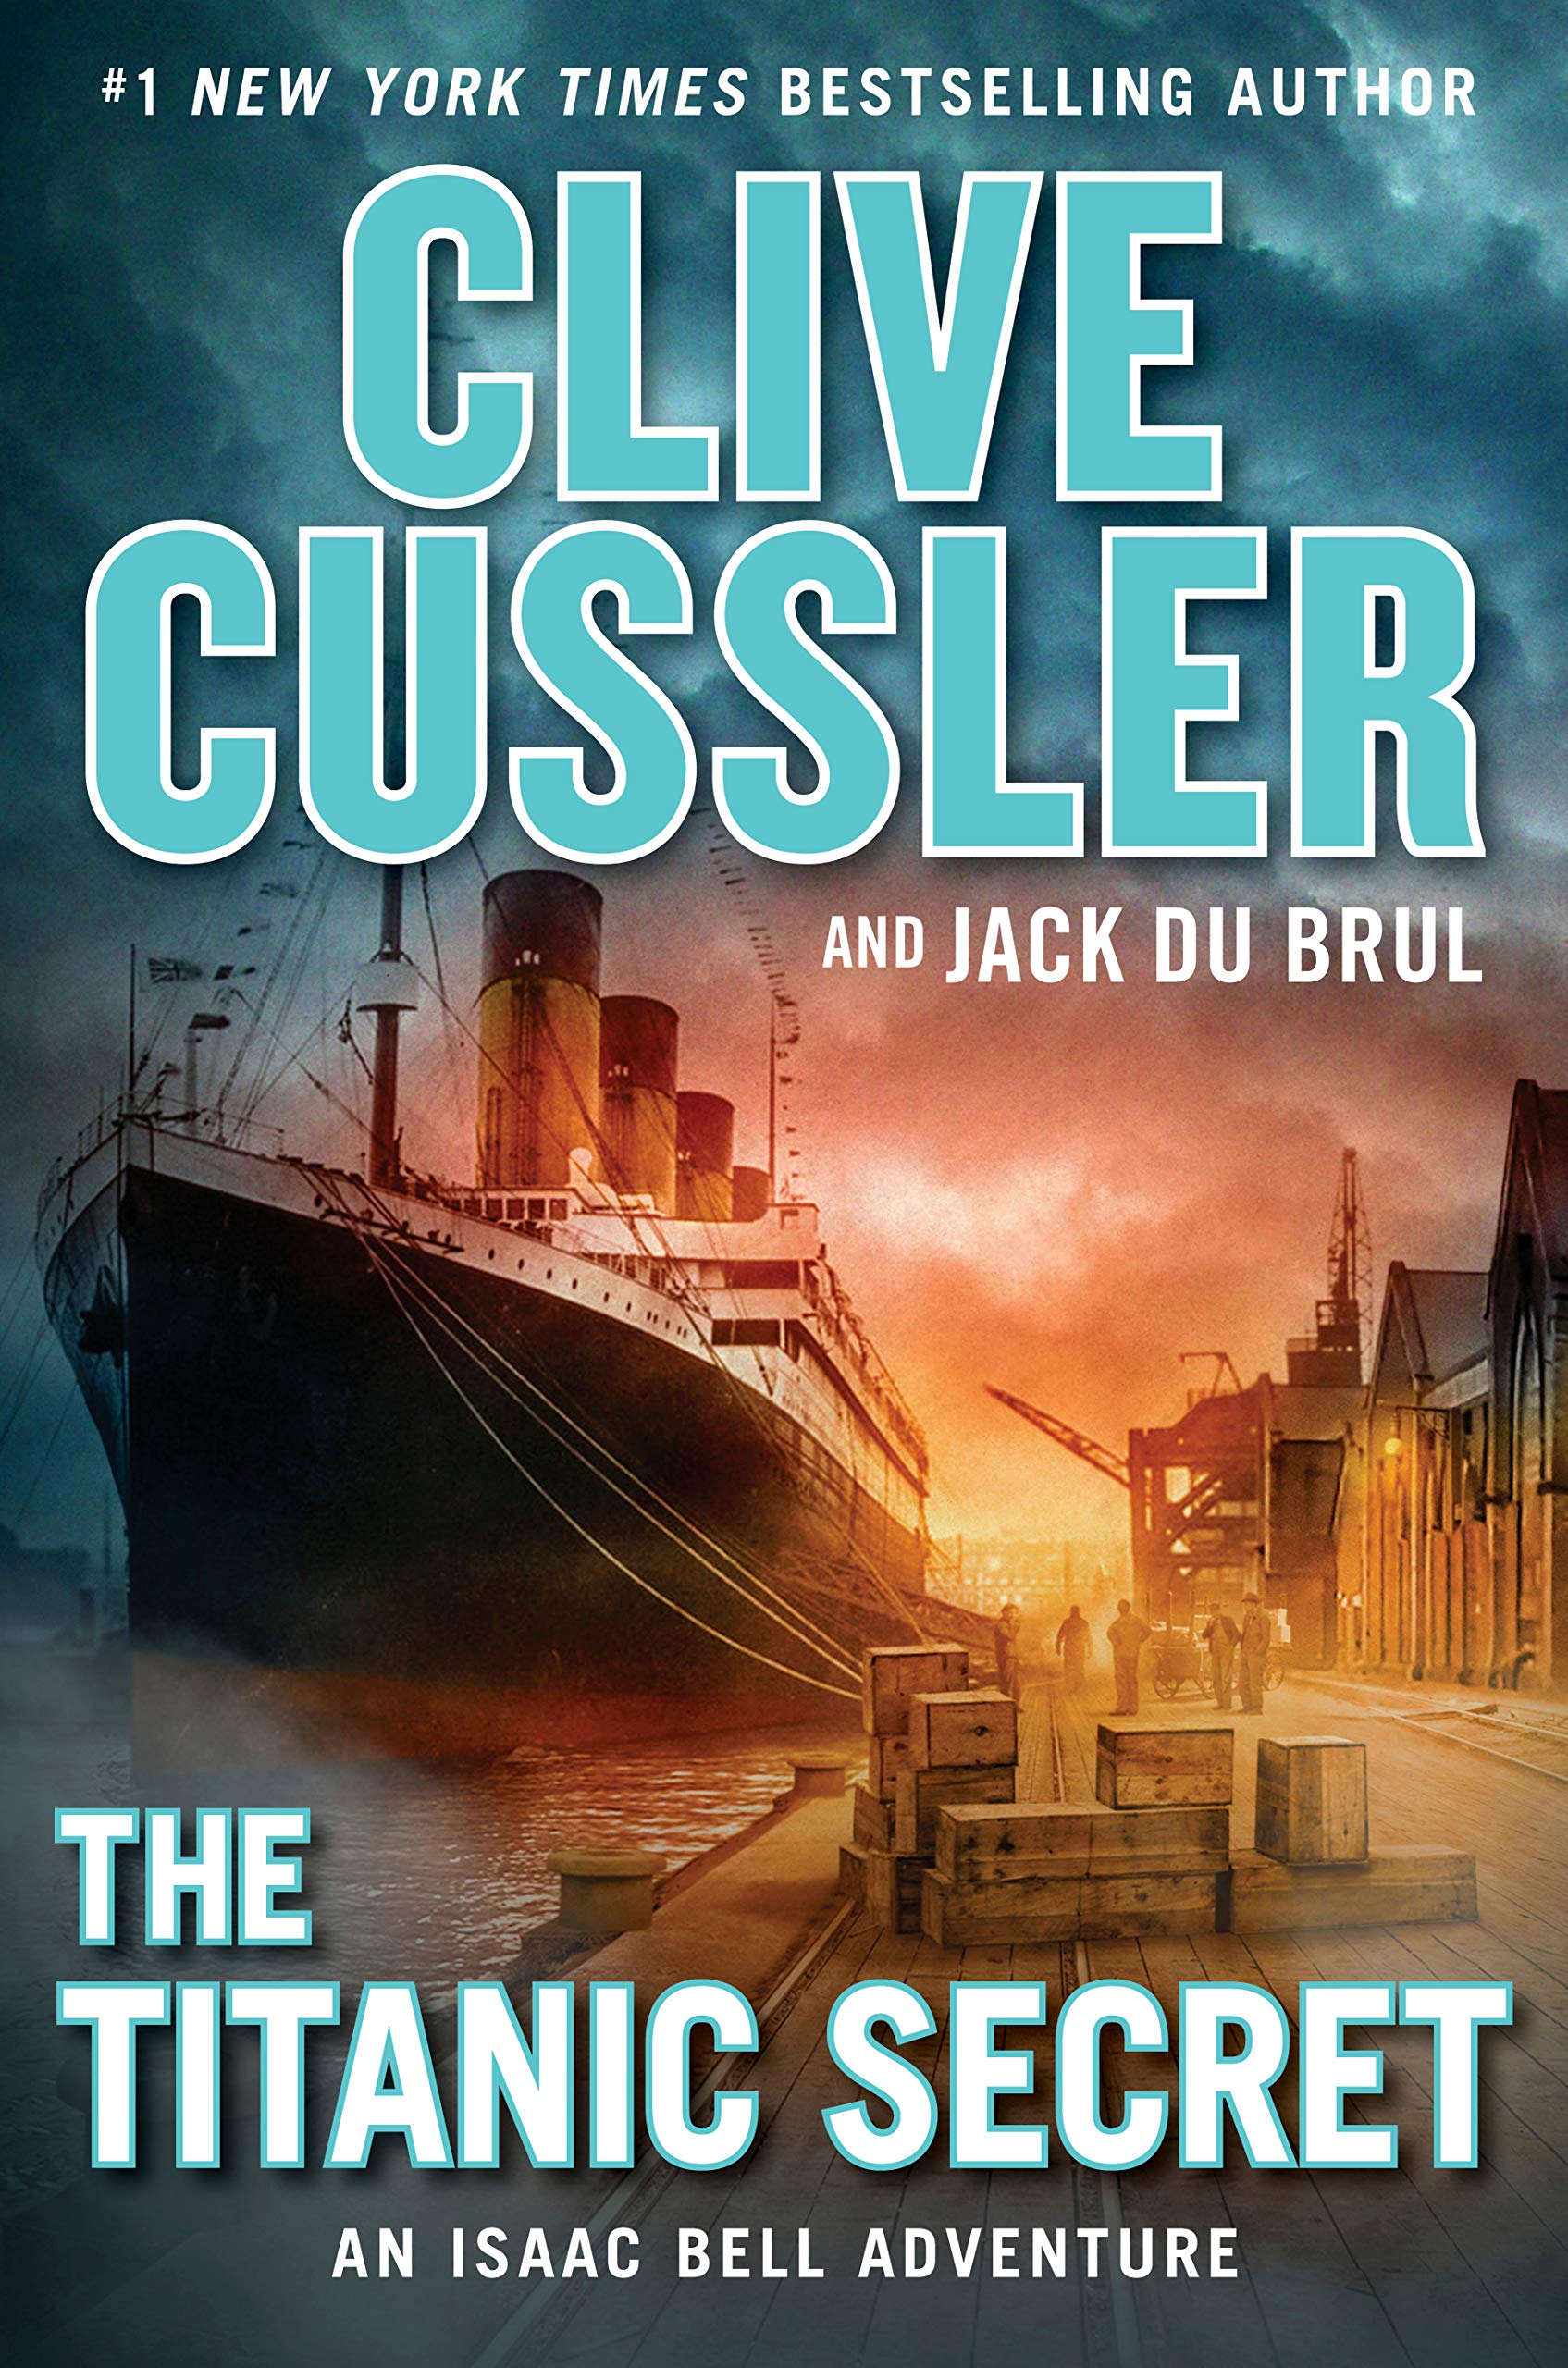 Clive Cussler The Titanic Secret cover